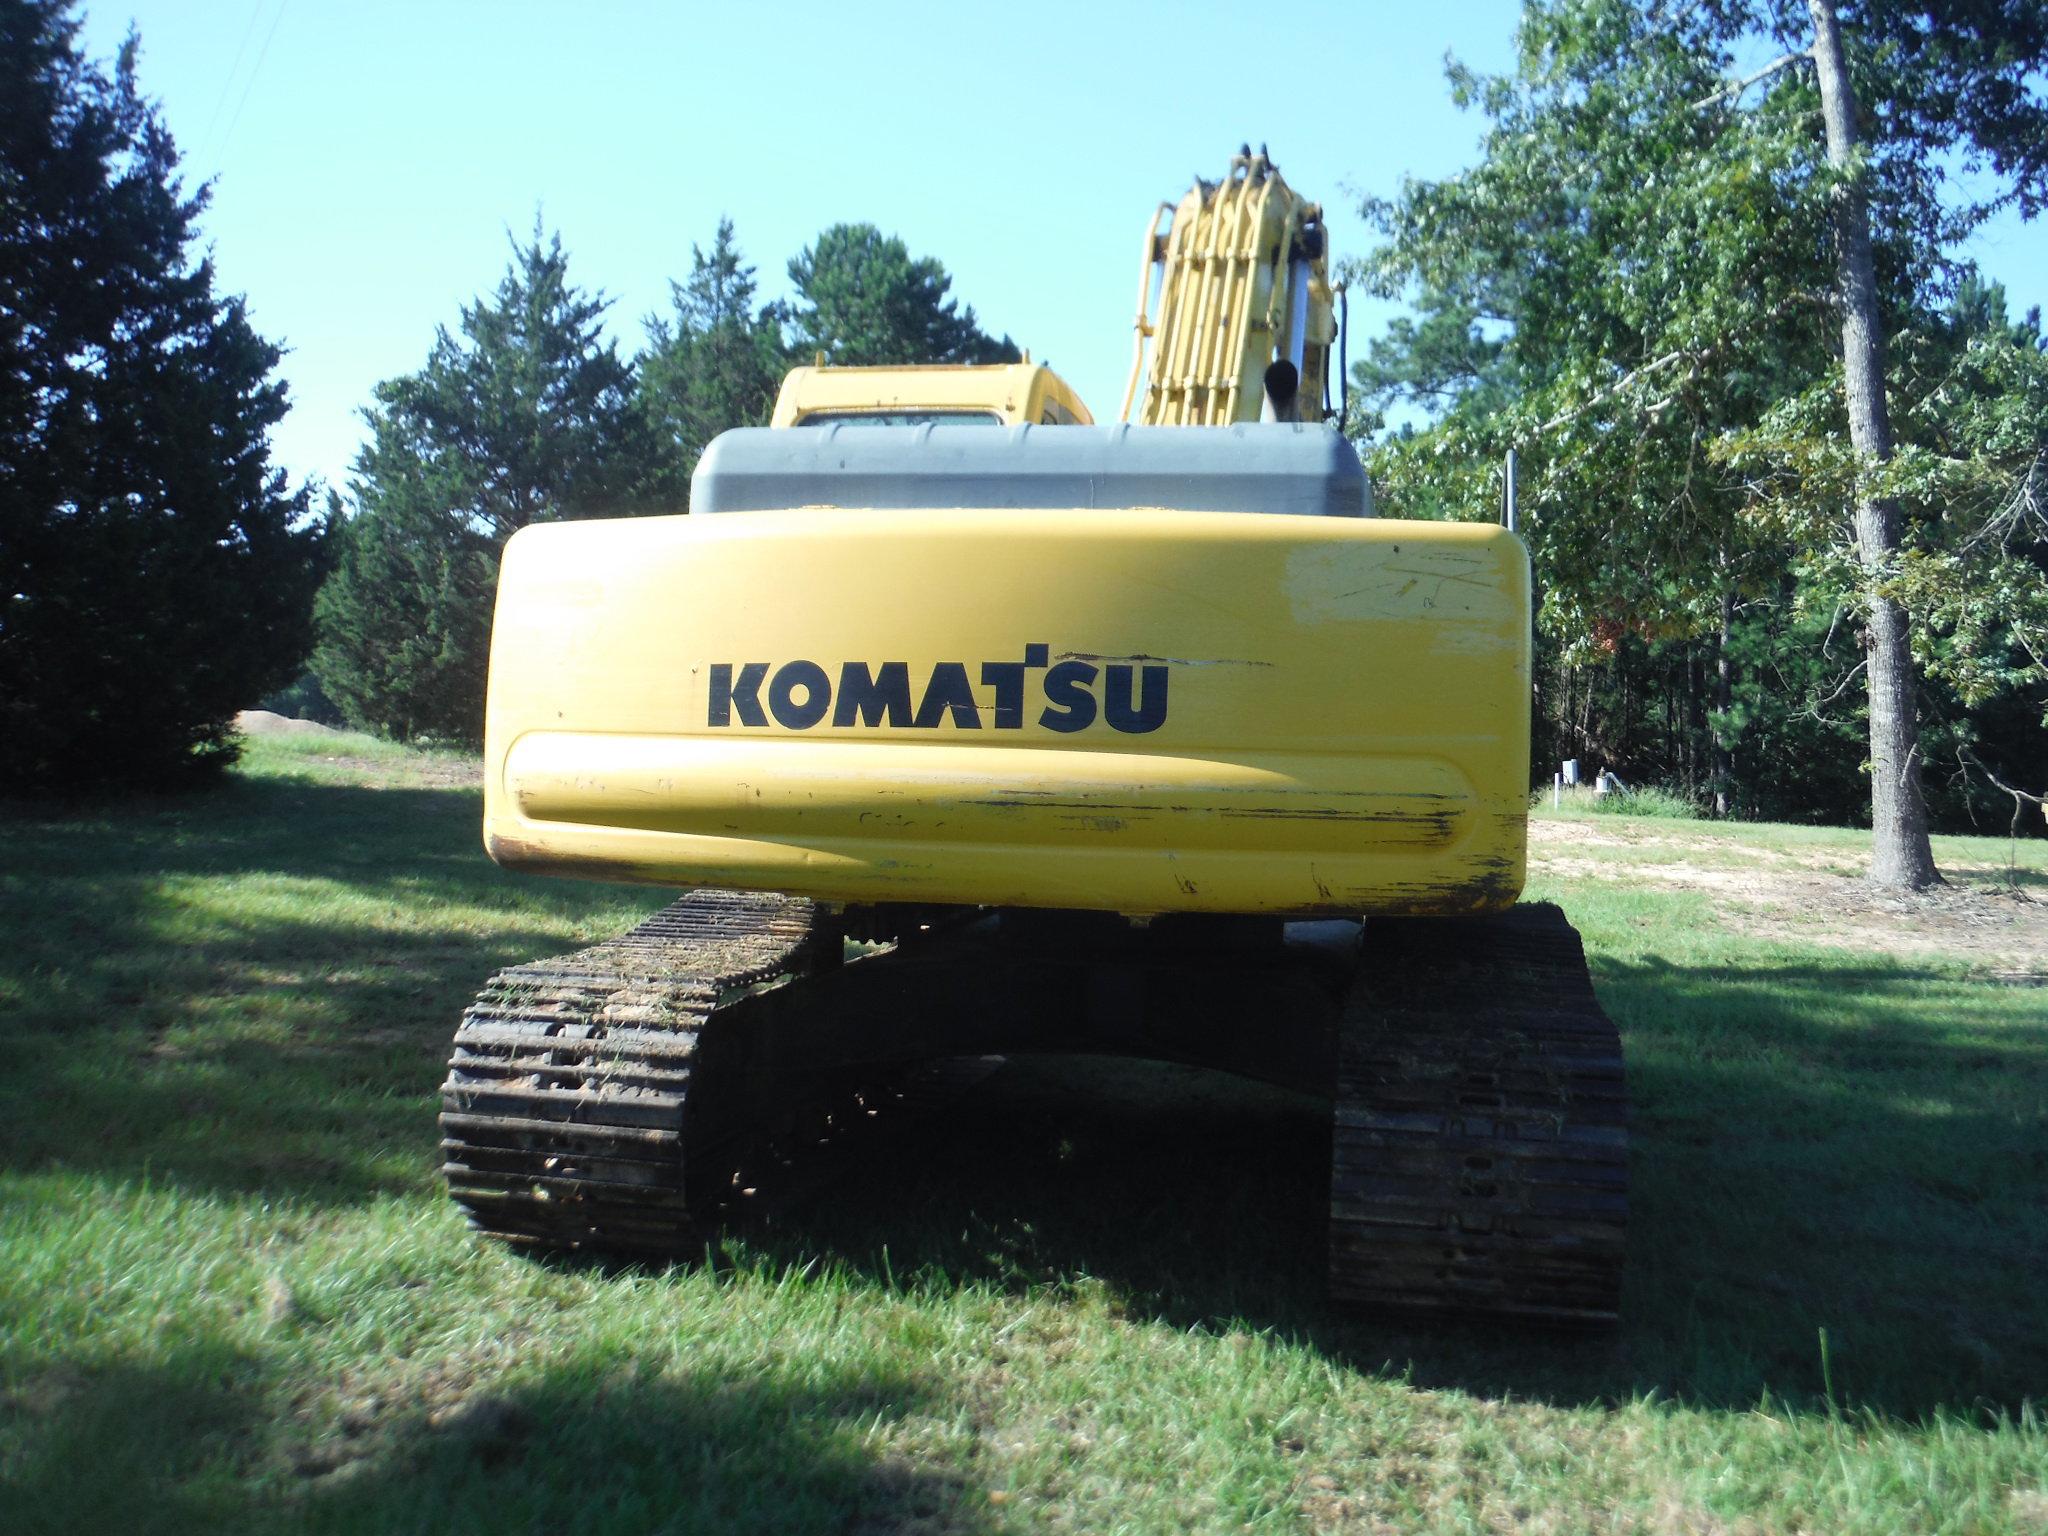 1998 Komatsu PC200 LC-6LC Excavator.